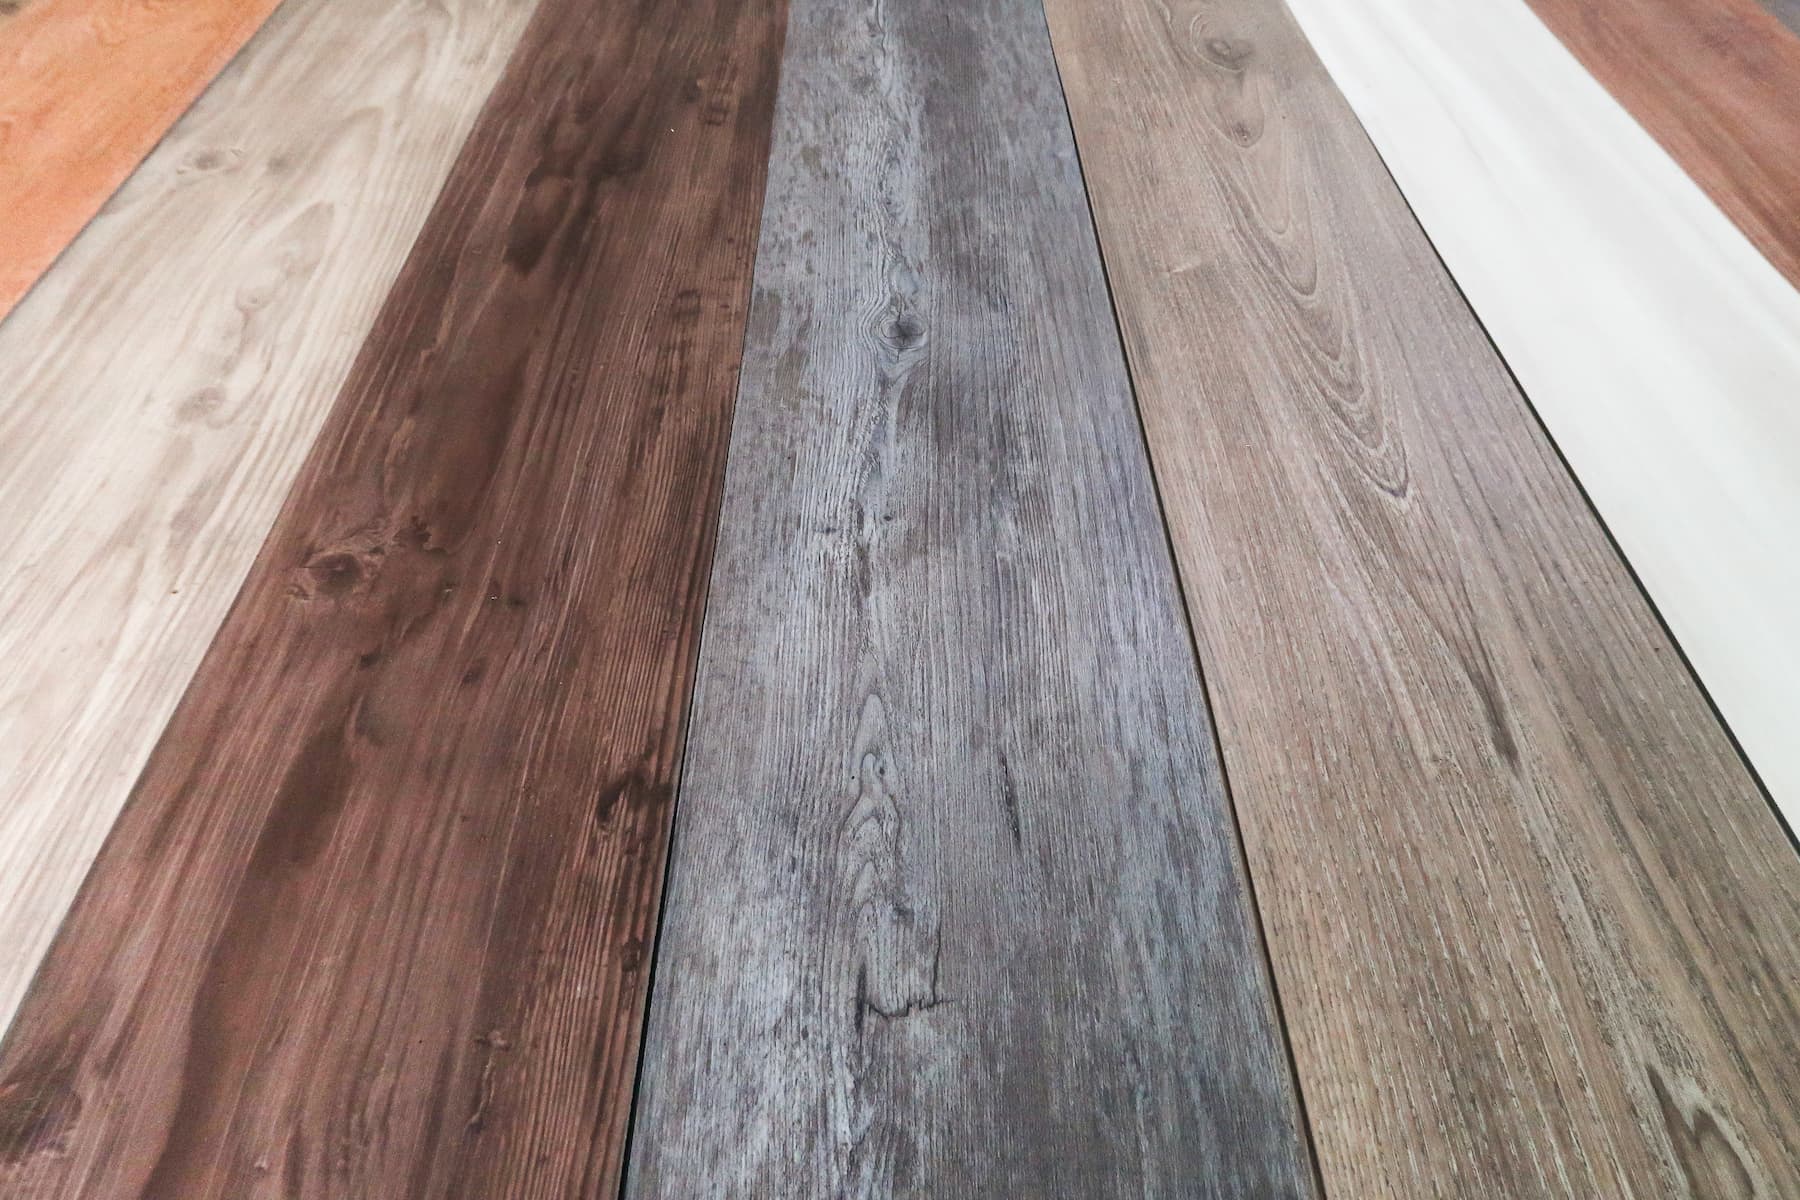 how to Clean Luxury Vinyl Plank (LVP) Flooring